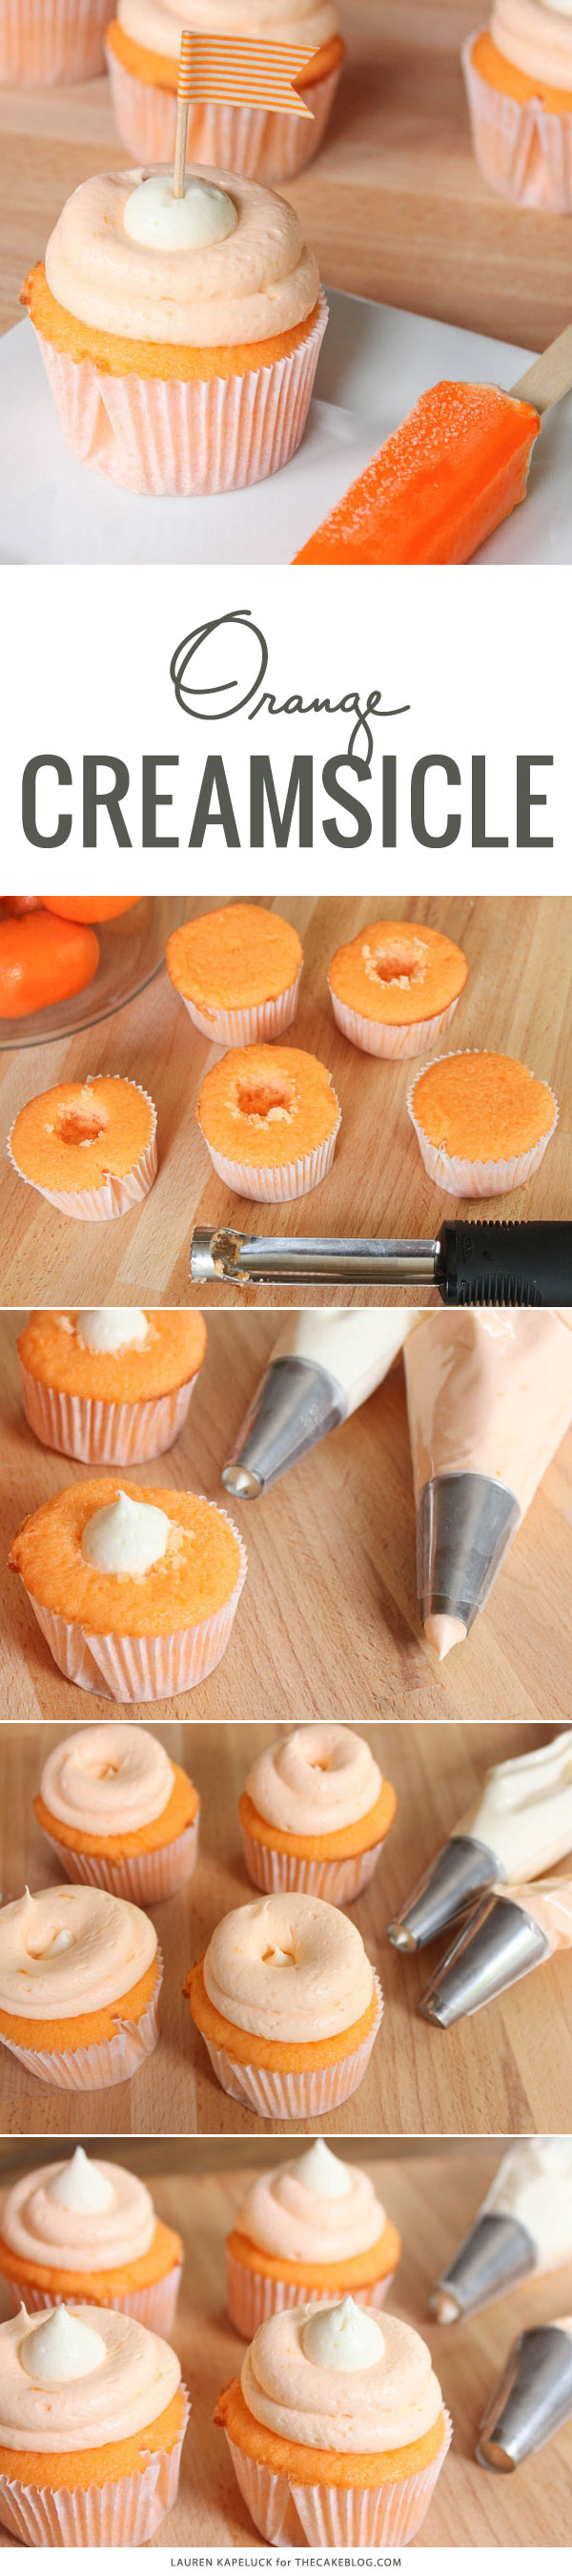 Creamsicle Cupcake Recipe | by Lauren Kapeluck for TheCakeBlog.com